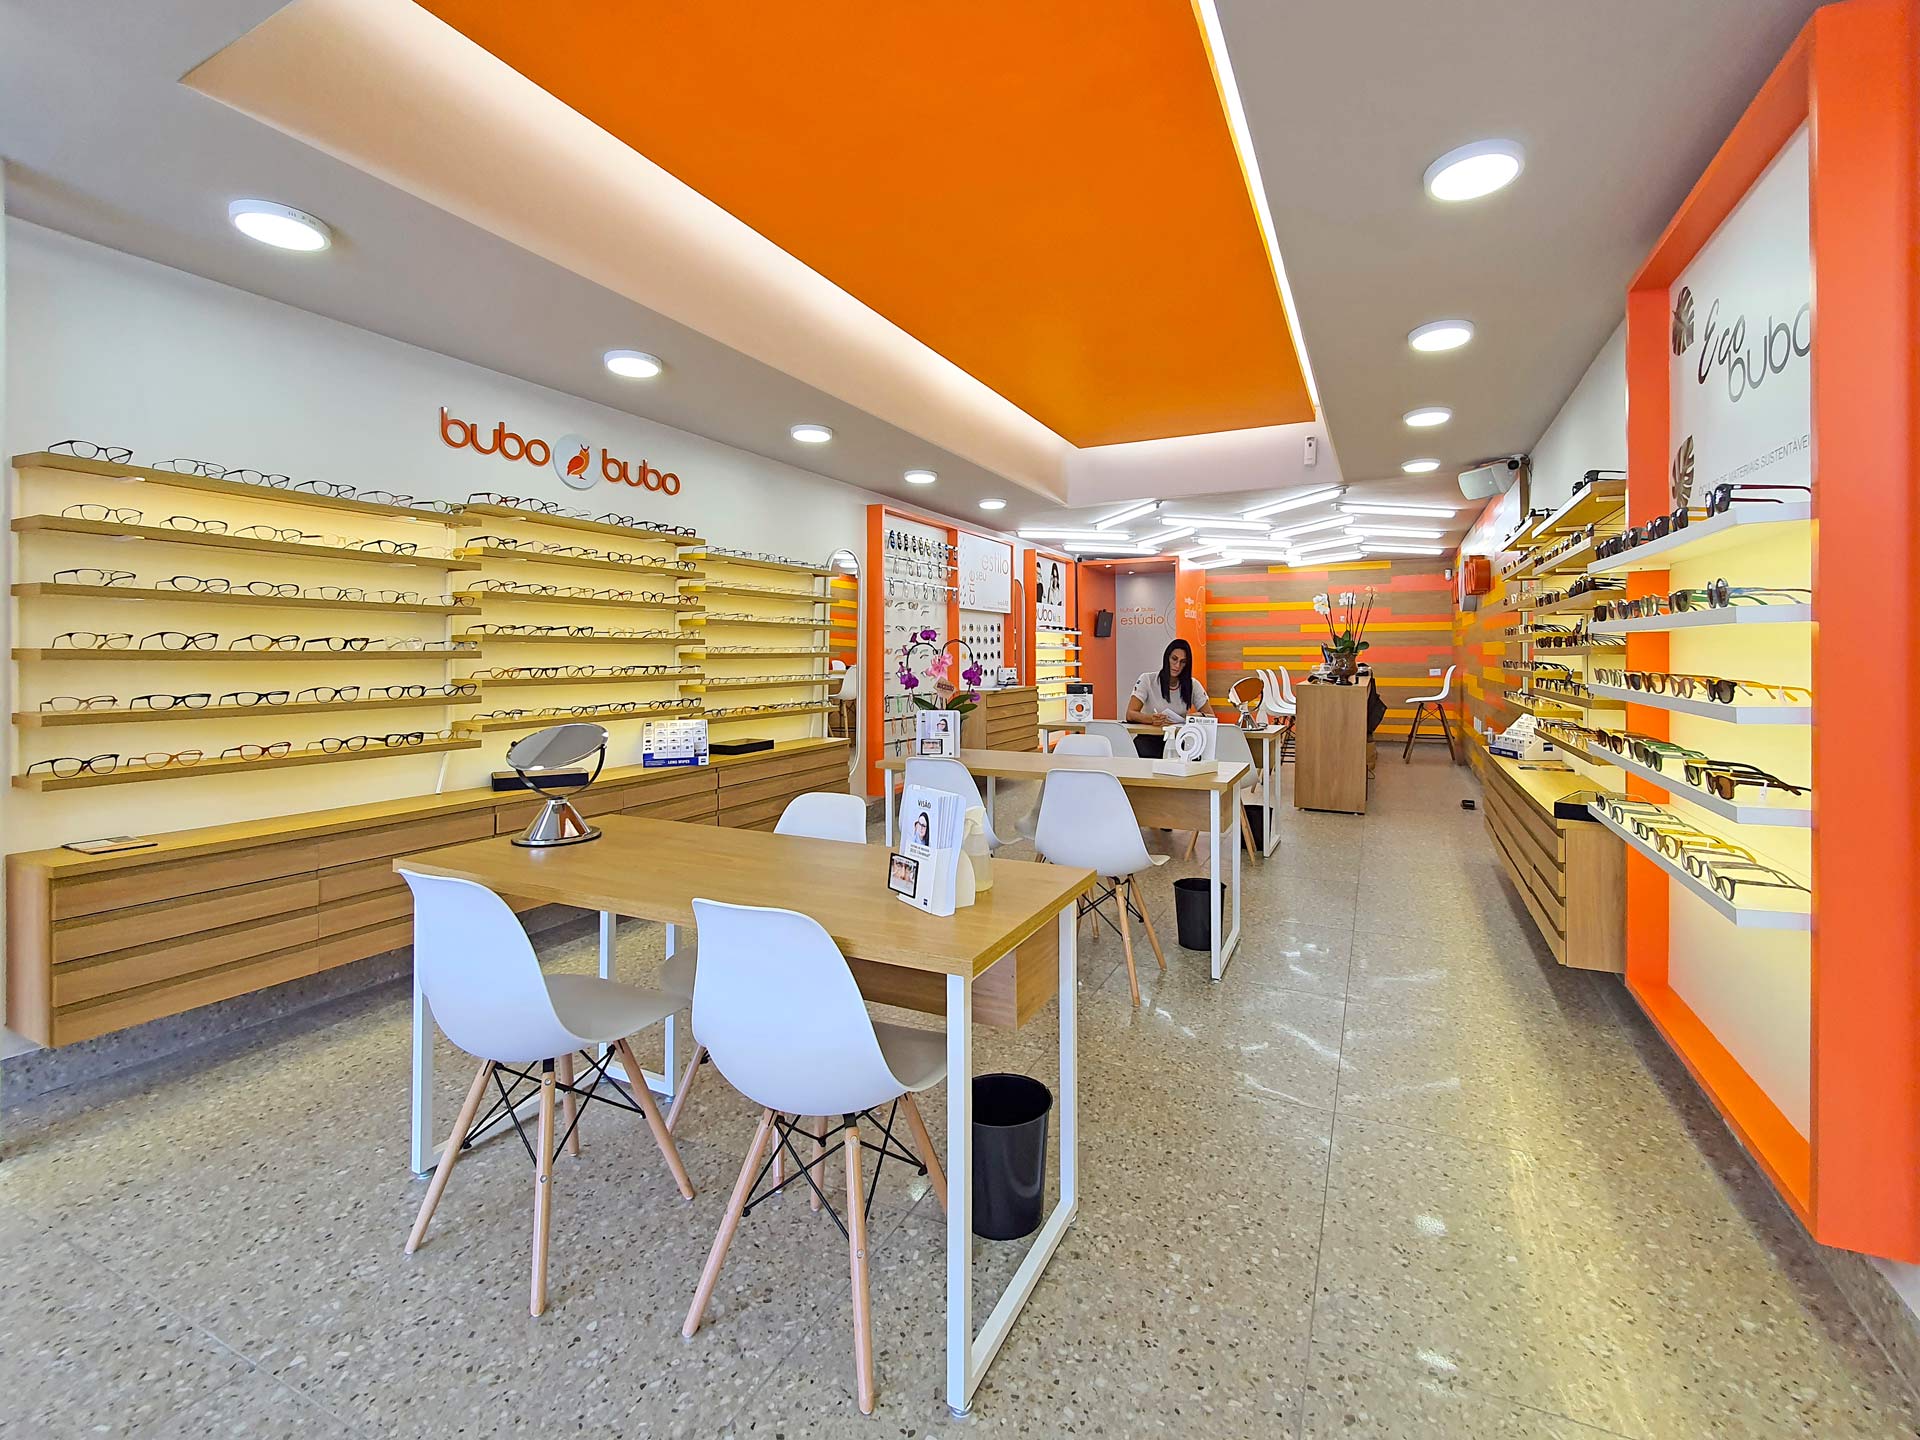 Arquitetura de interior de loja de óculos, ótica, Bubo Bubo.